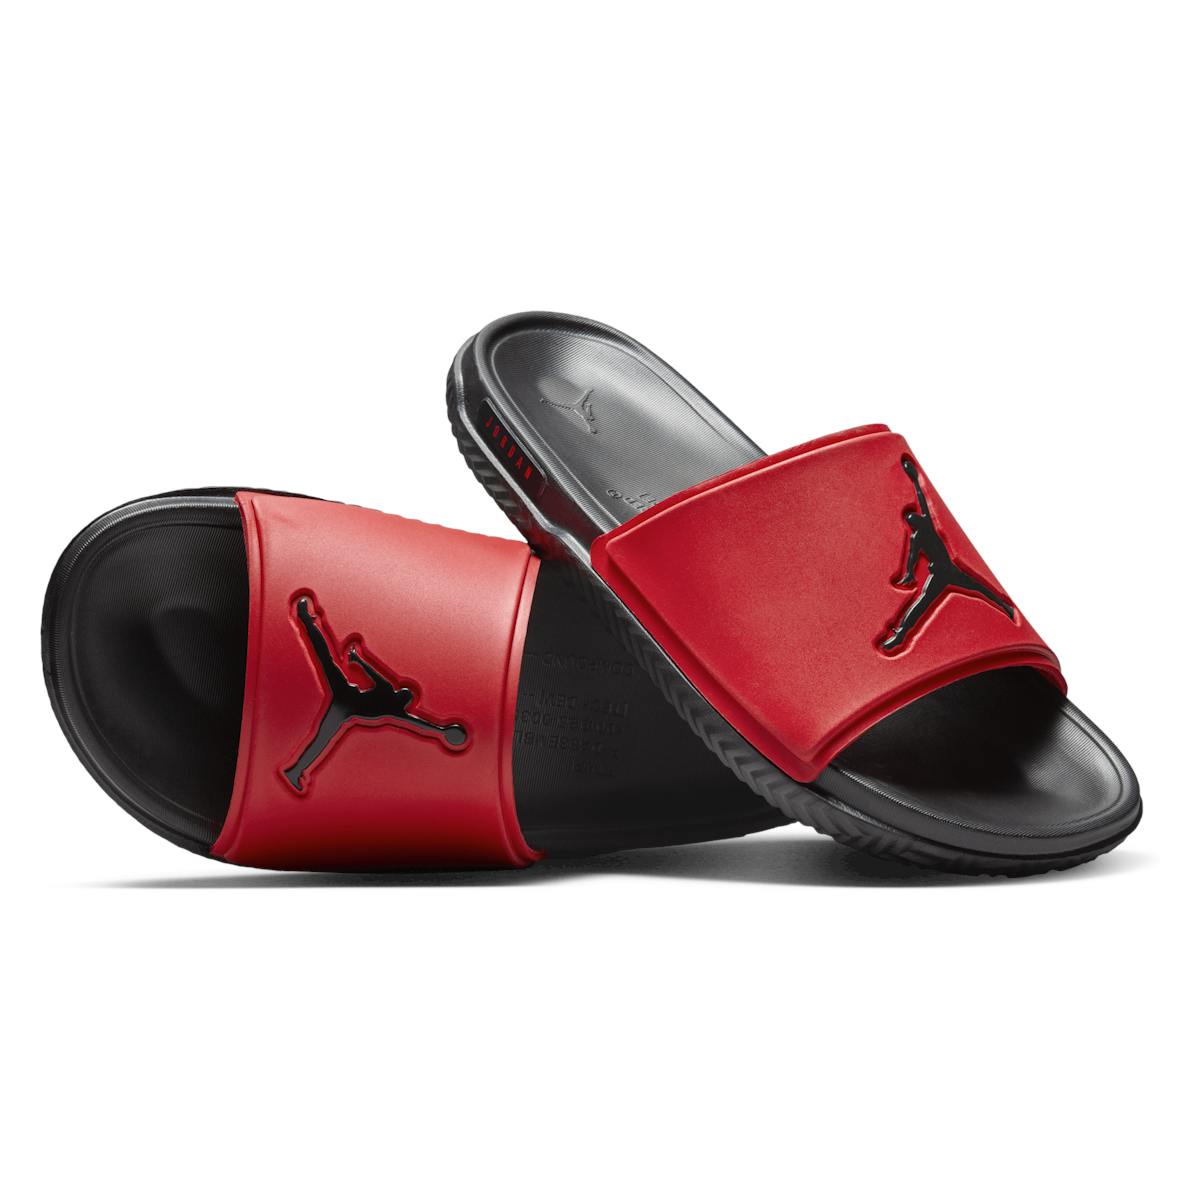 Air Jordan Jumpman slippers "Bred"